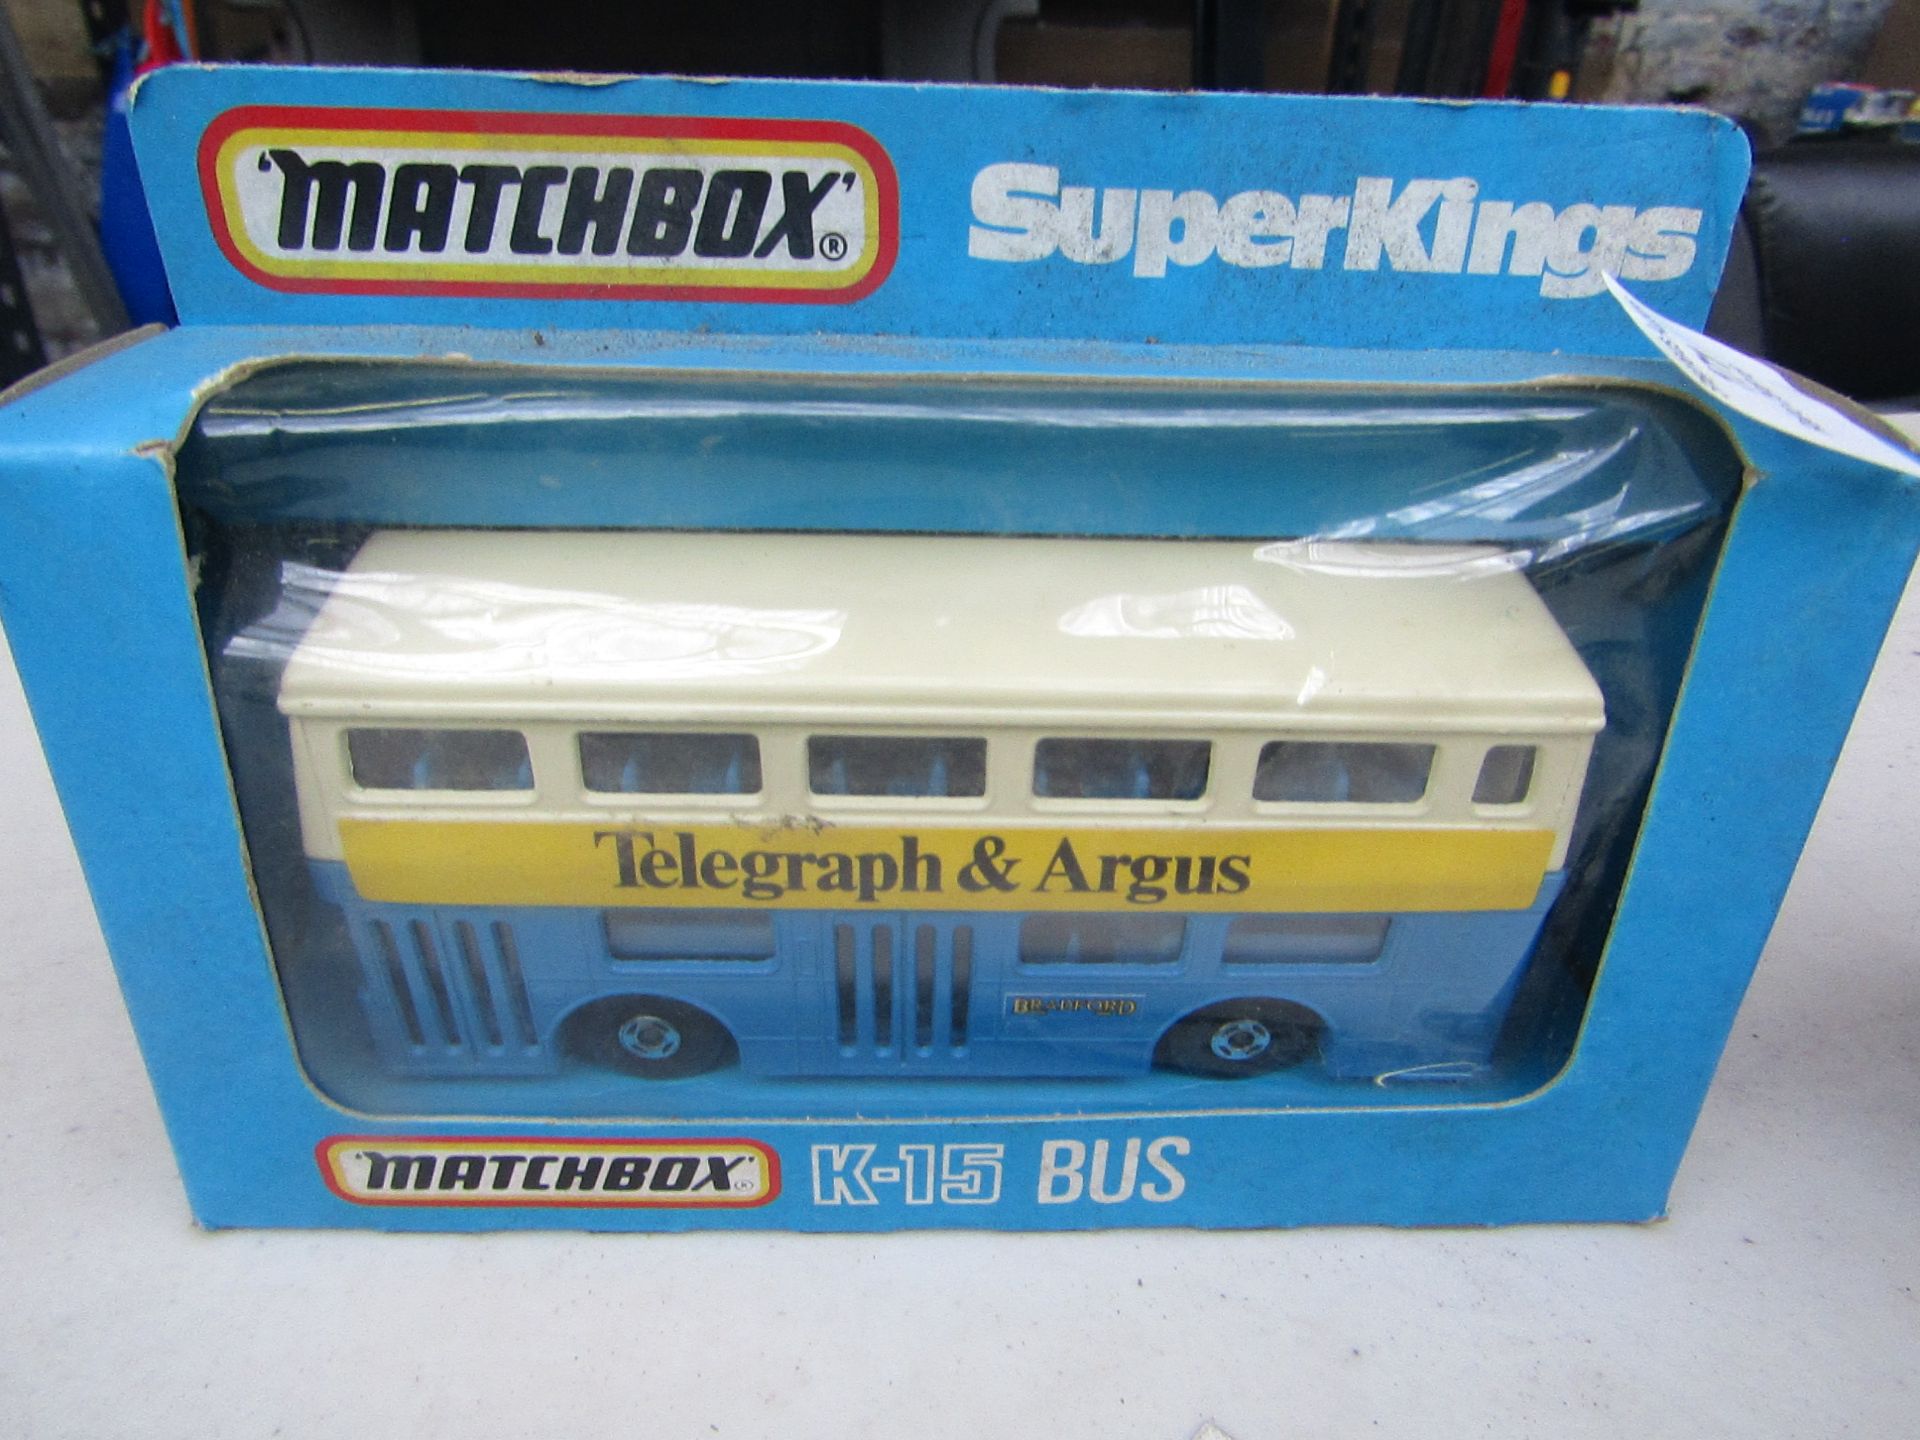 Matchbox Superkings K-15 Bedford Bus, in original box.